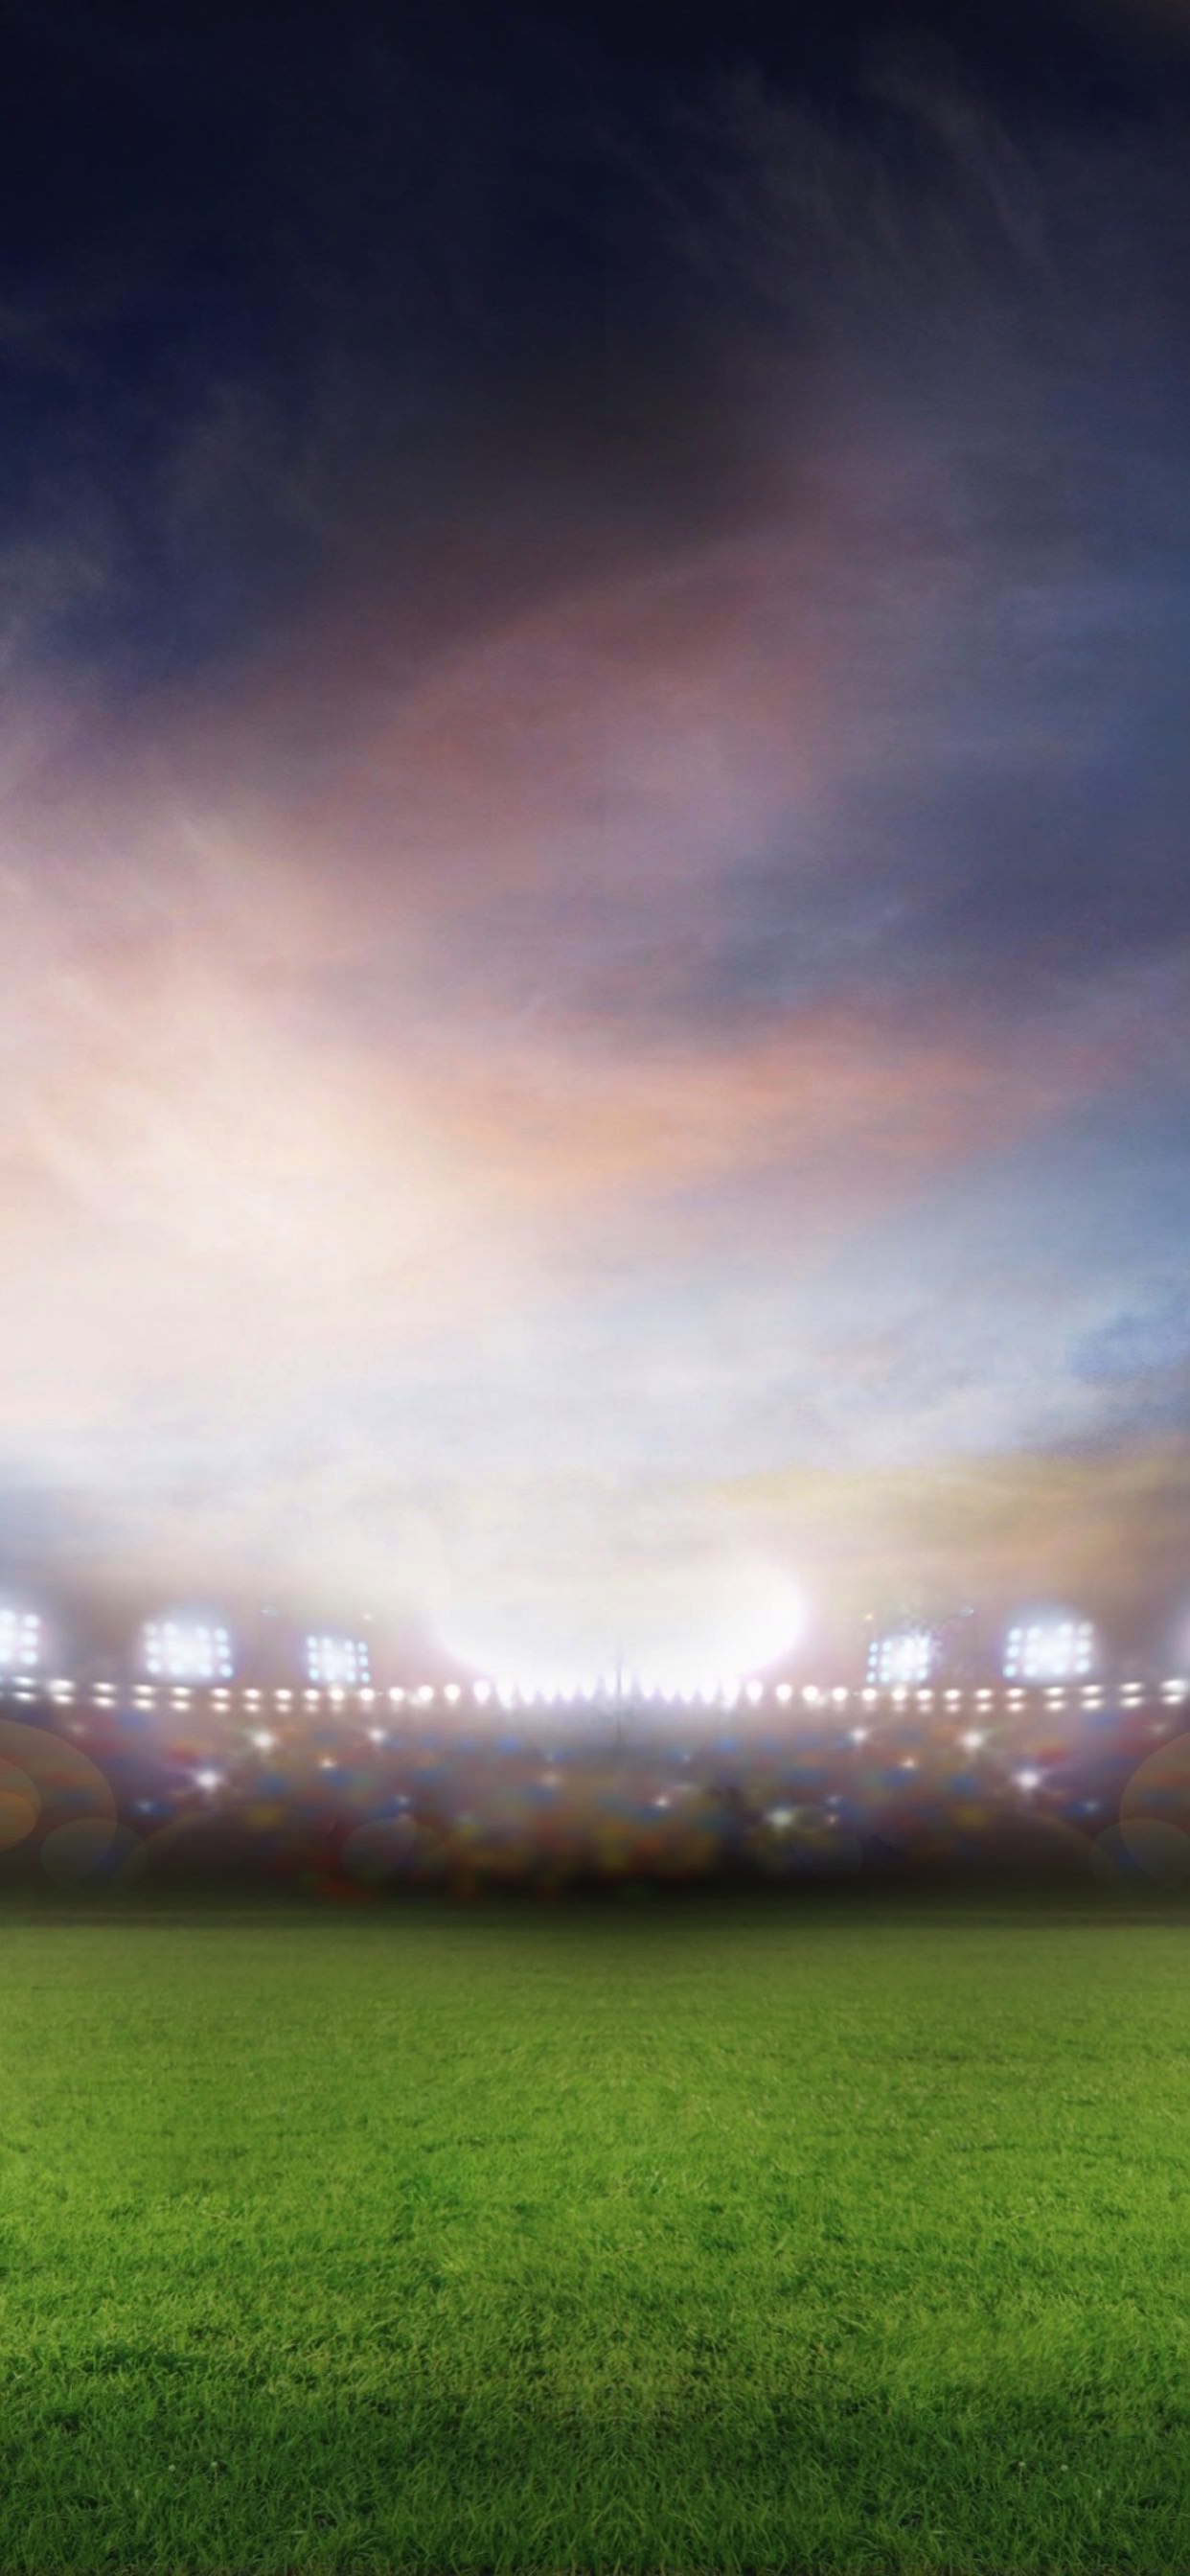 Landscape Stadium green | wallpaper.sc iPhone XS Max